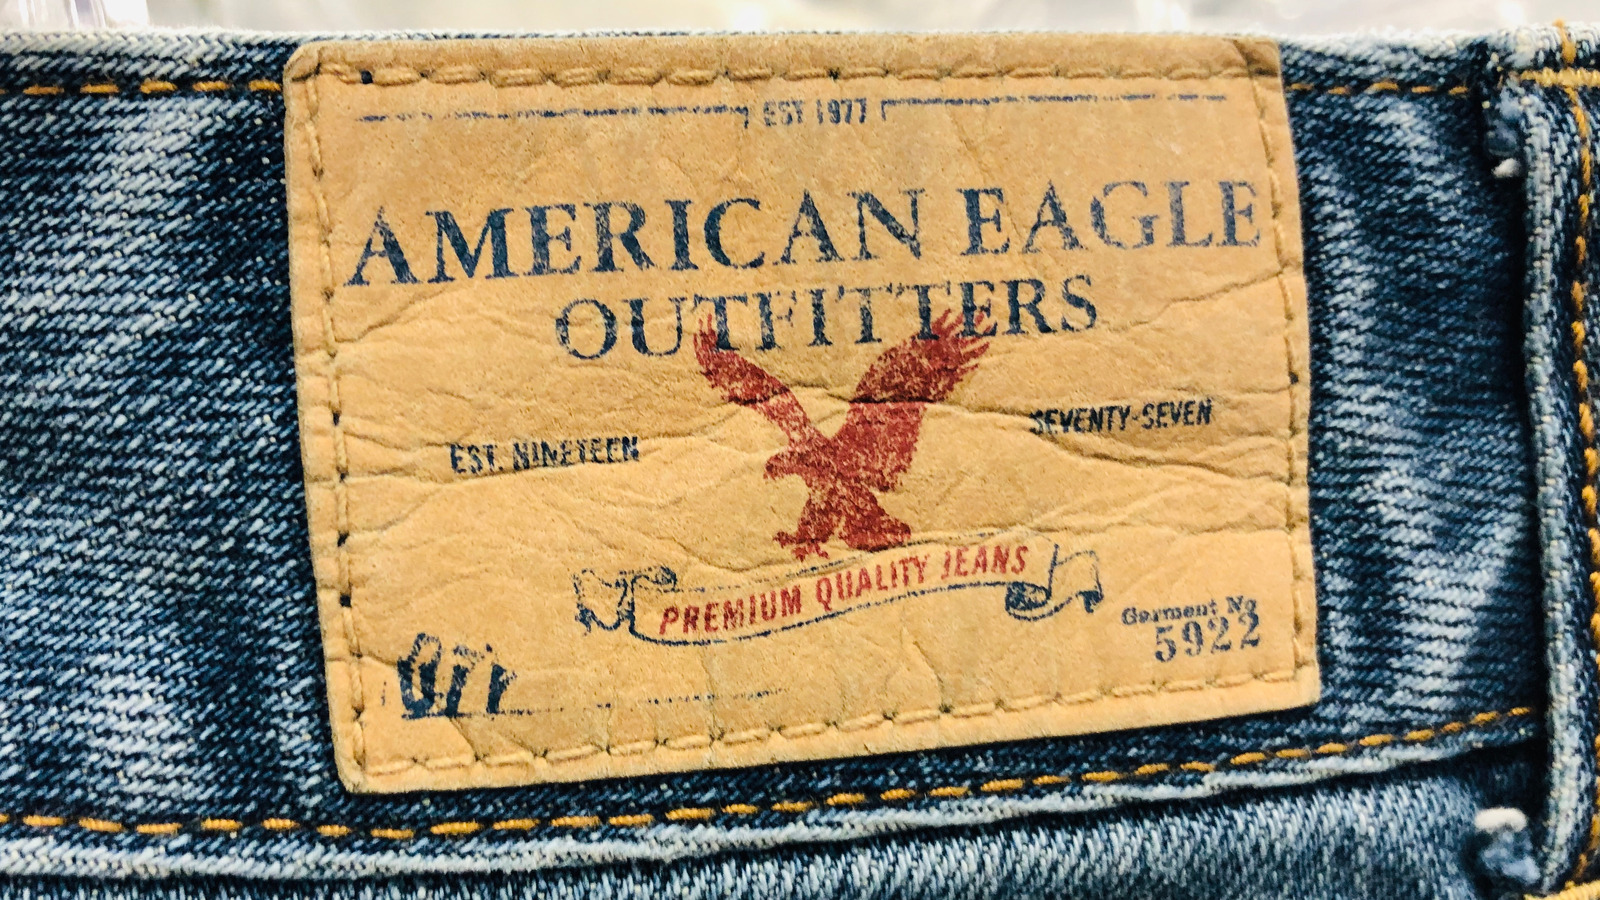 Американ игл. American Eagle Outfitters одежда. Американ игл вышивка. Обувь Американ игл. Американ игл вышивка бренда на одежде.